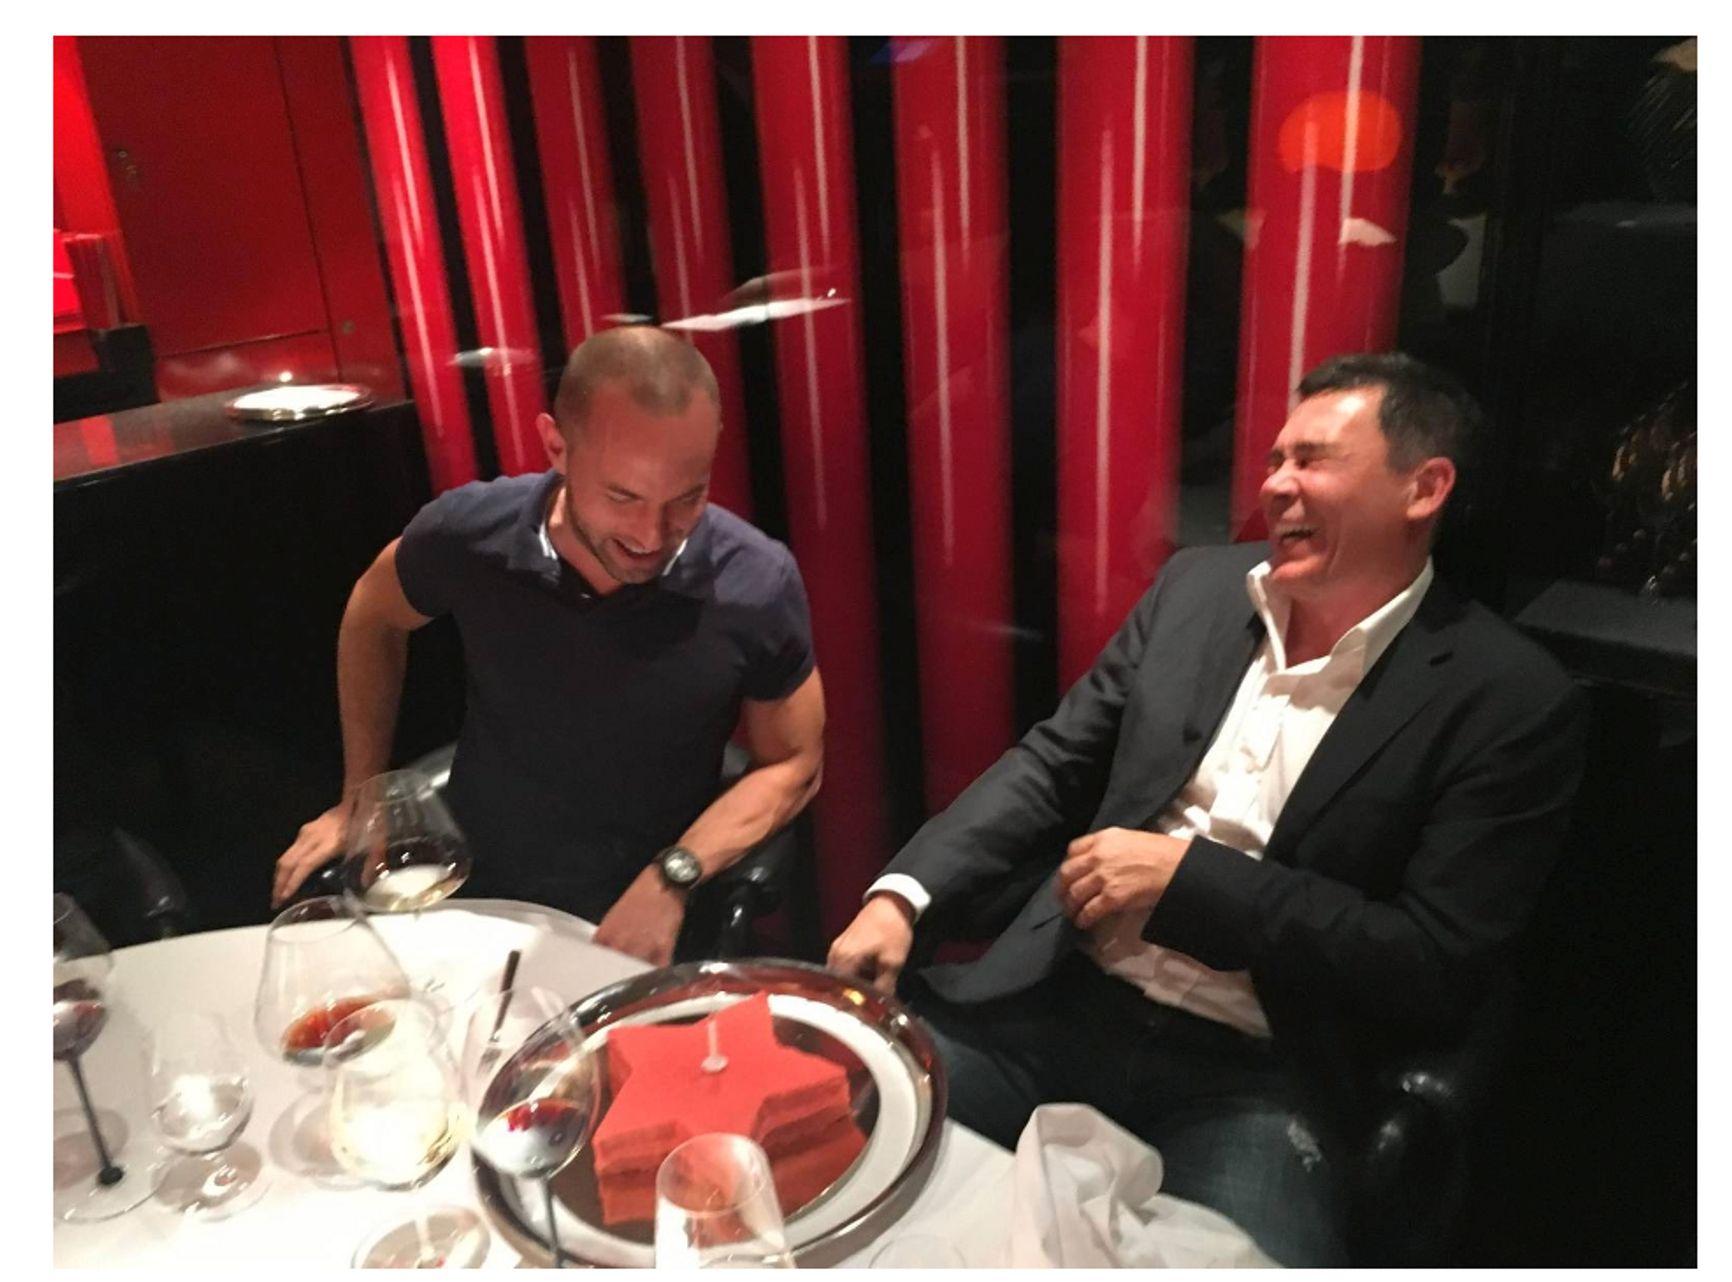 Jan Marsalek and Stanislav Petlinsky celebrating Petlinsky’s birthday at the Munich restaurant "Tantris".